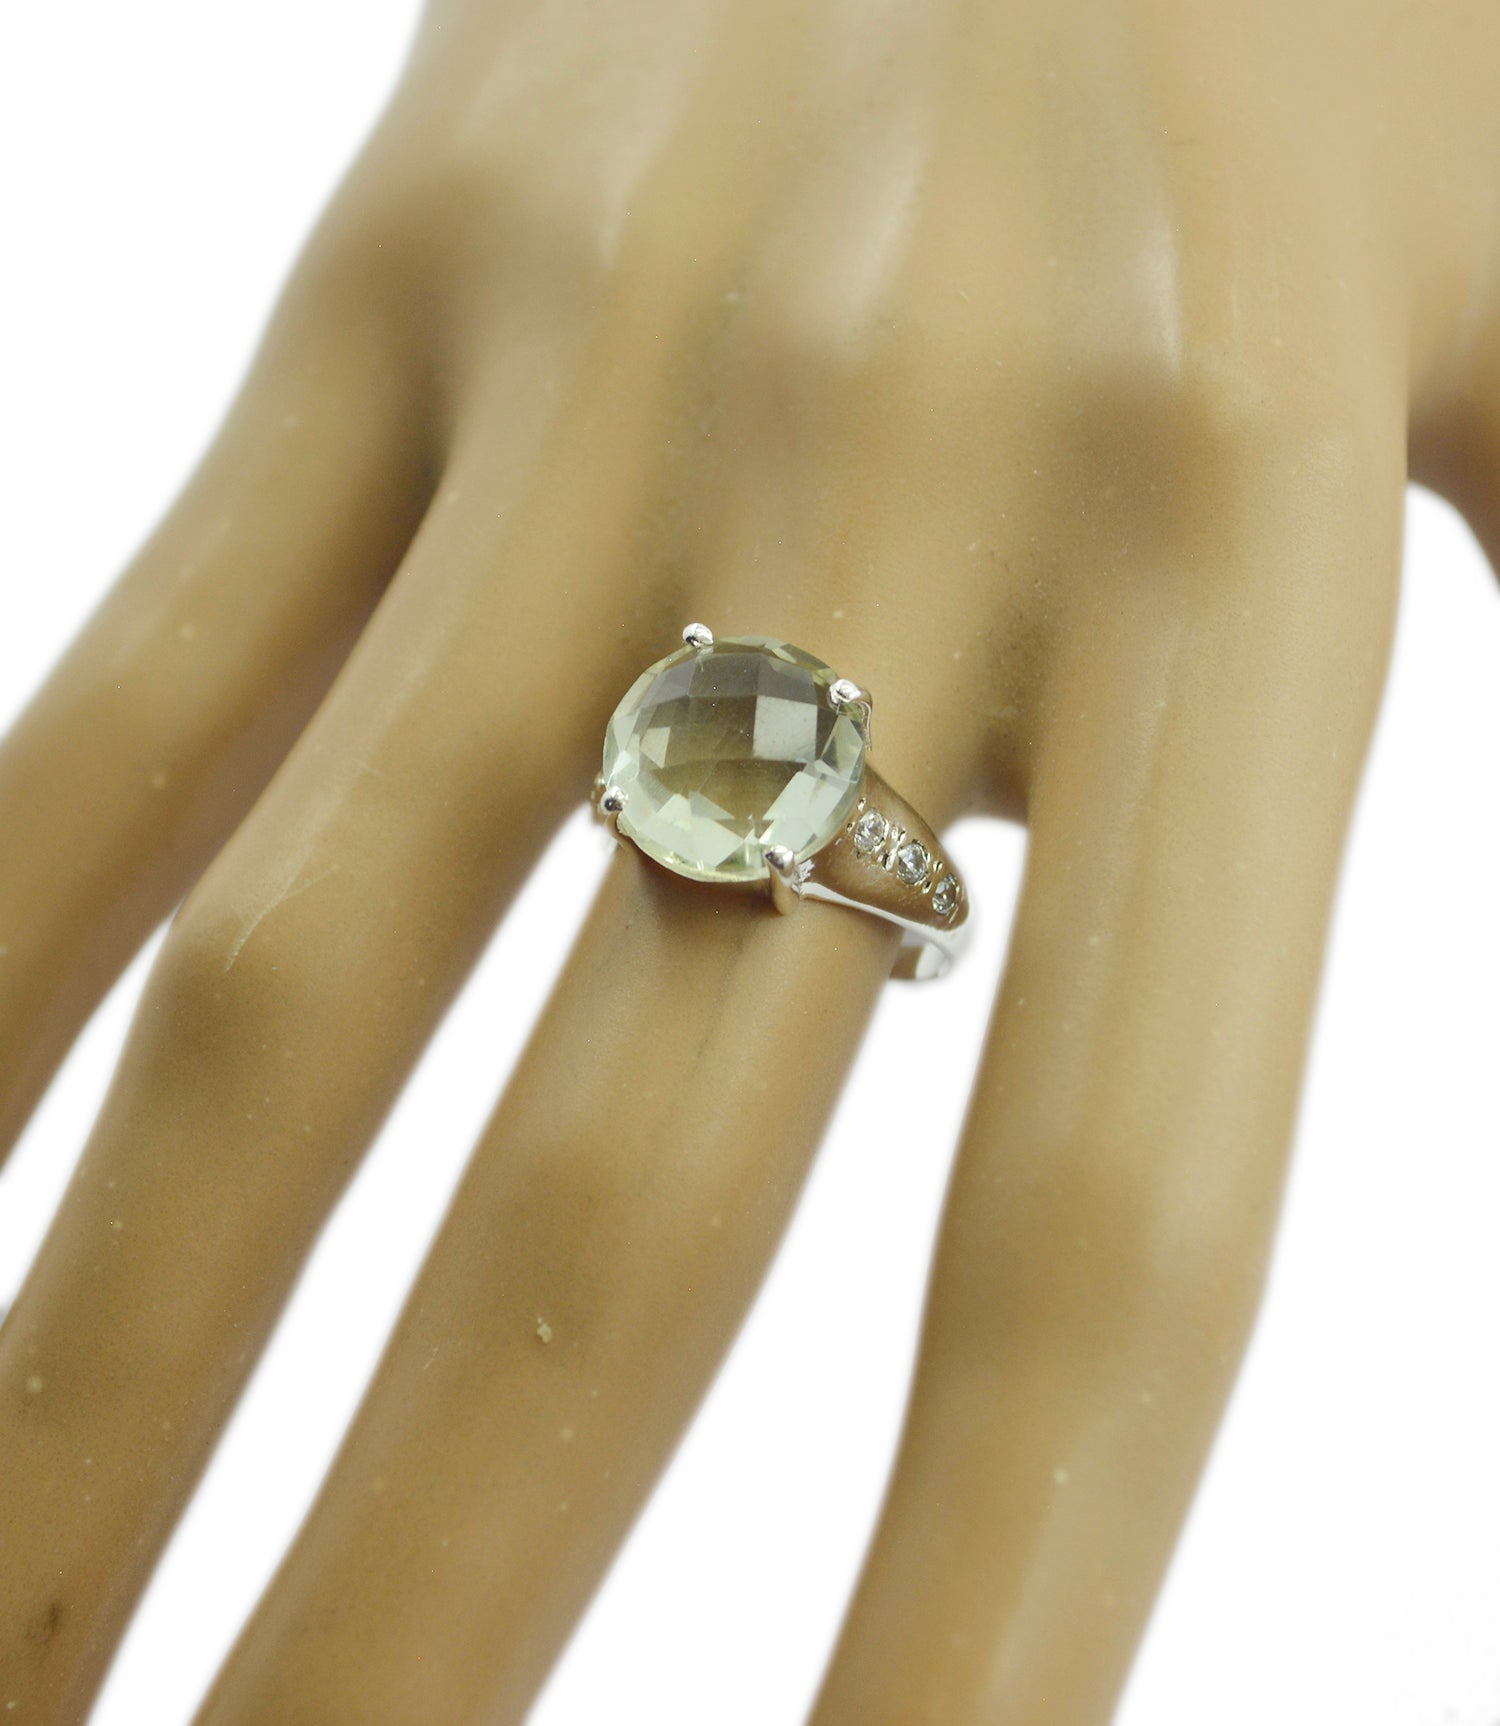 Ravishing Gemstone Green Amethyst 925 Sterling Silver Ring Initial